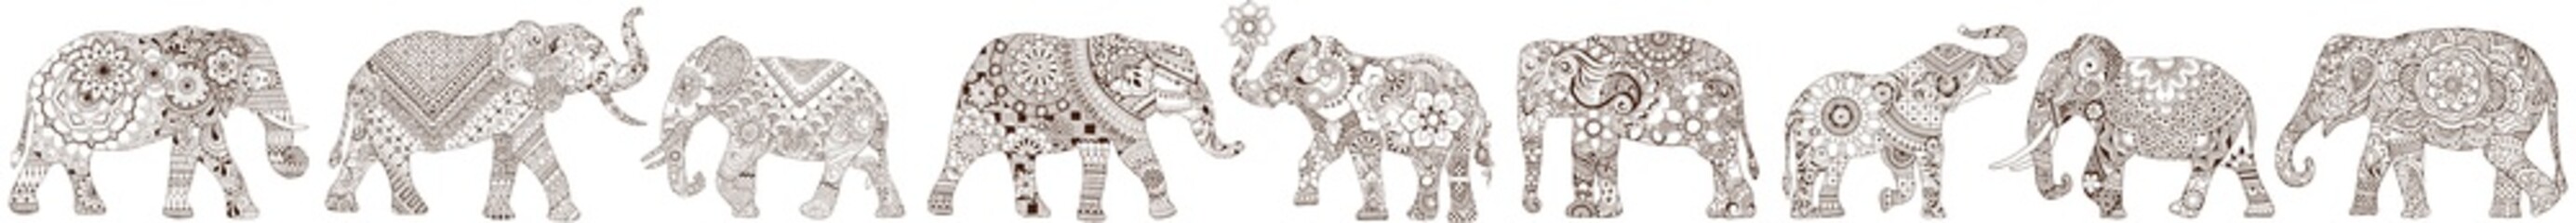 ПечатьA set of ornate elephants in mehndi style.